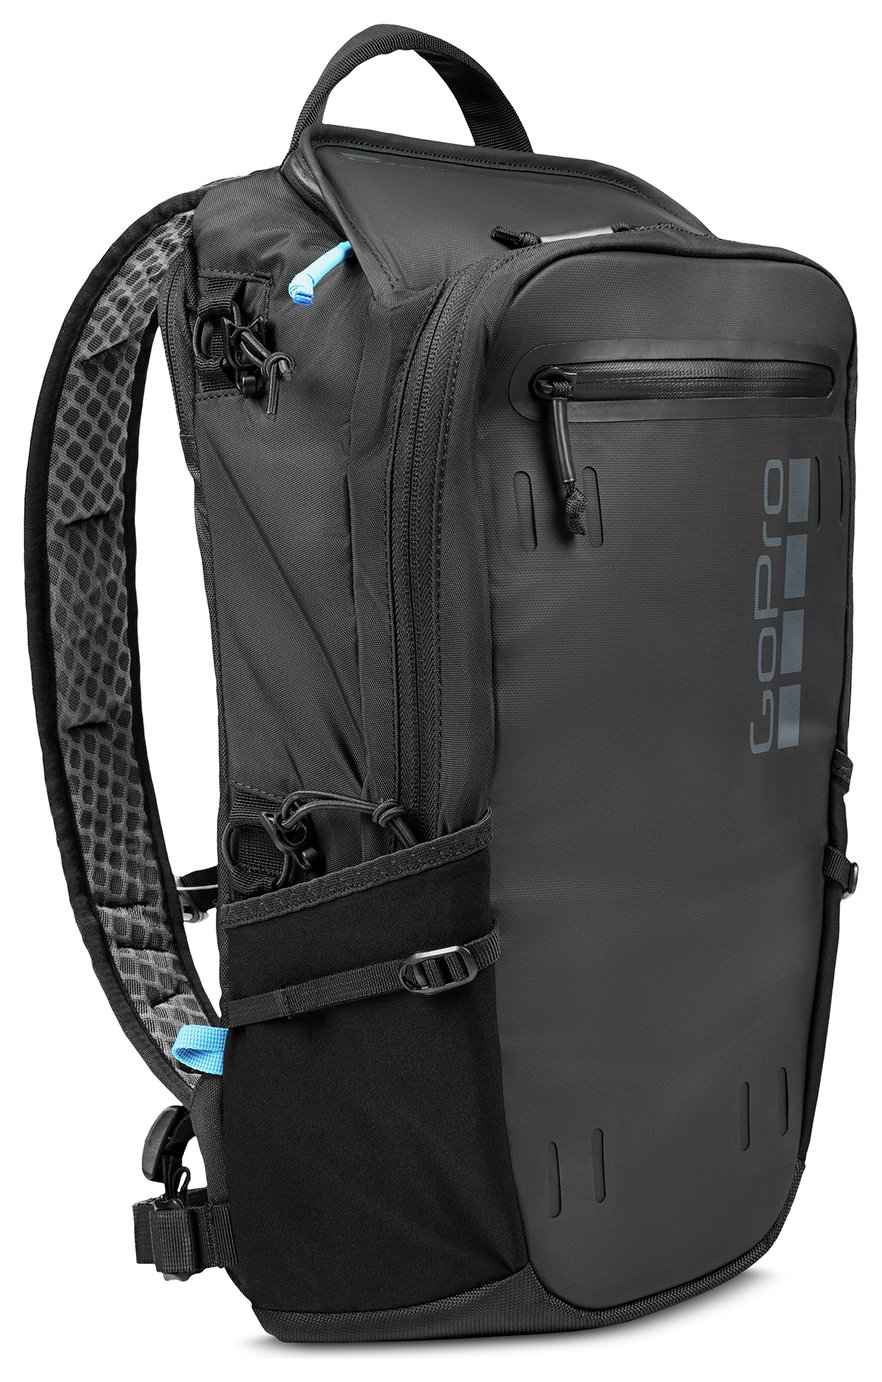 GoPro Seeker Backpack review